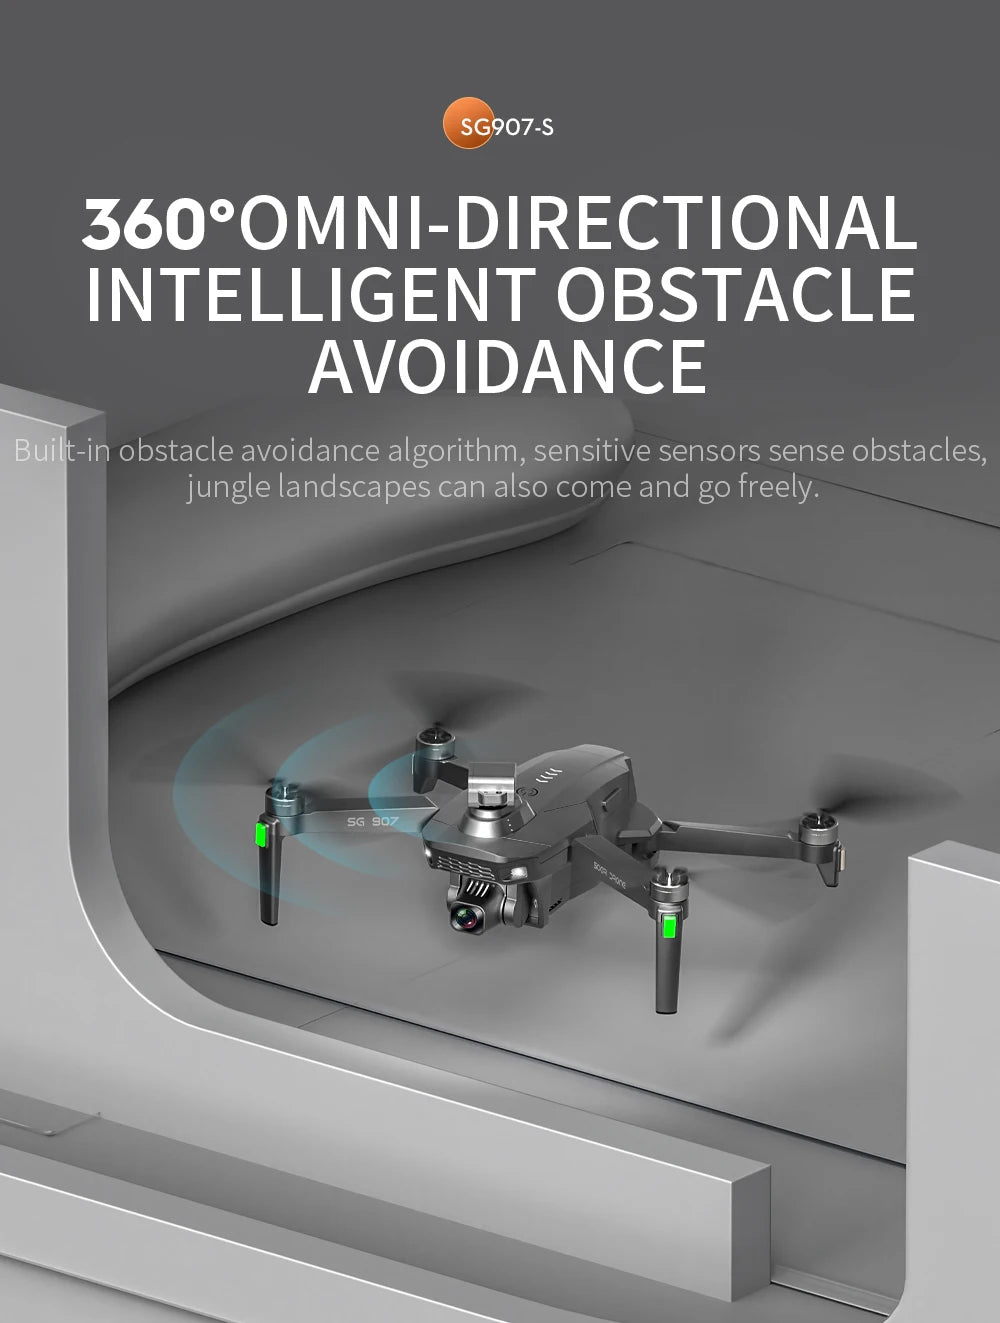 SG907S Drone, SG9O7-$ 360'OMNI-DIRECTIONAL INTELLIGENT